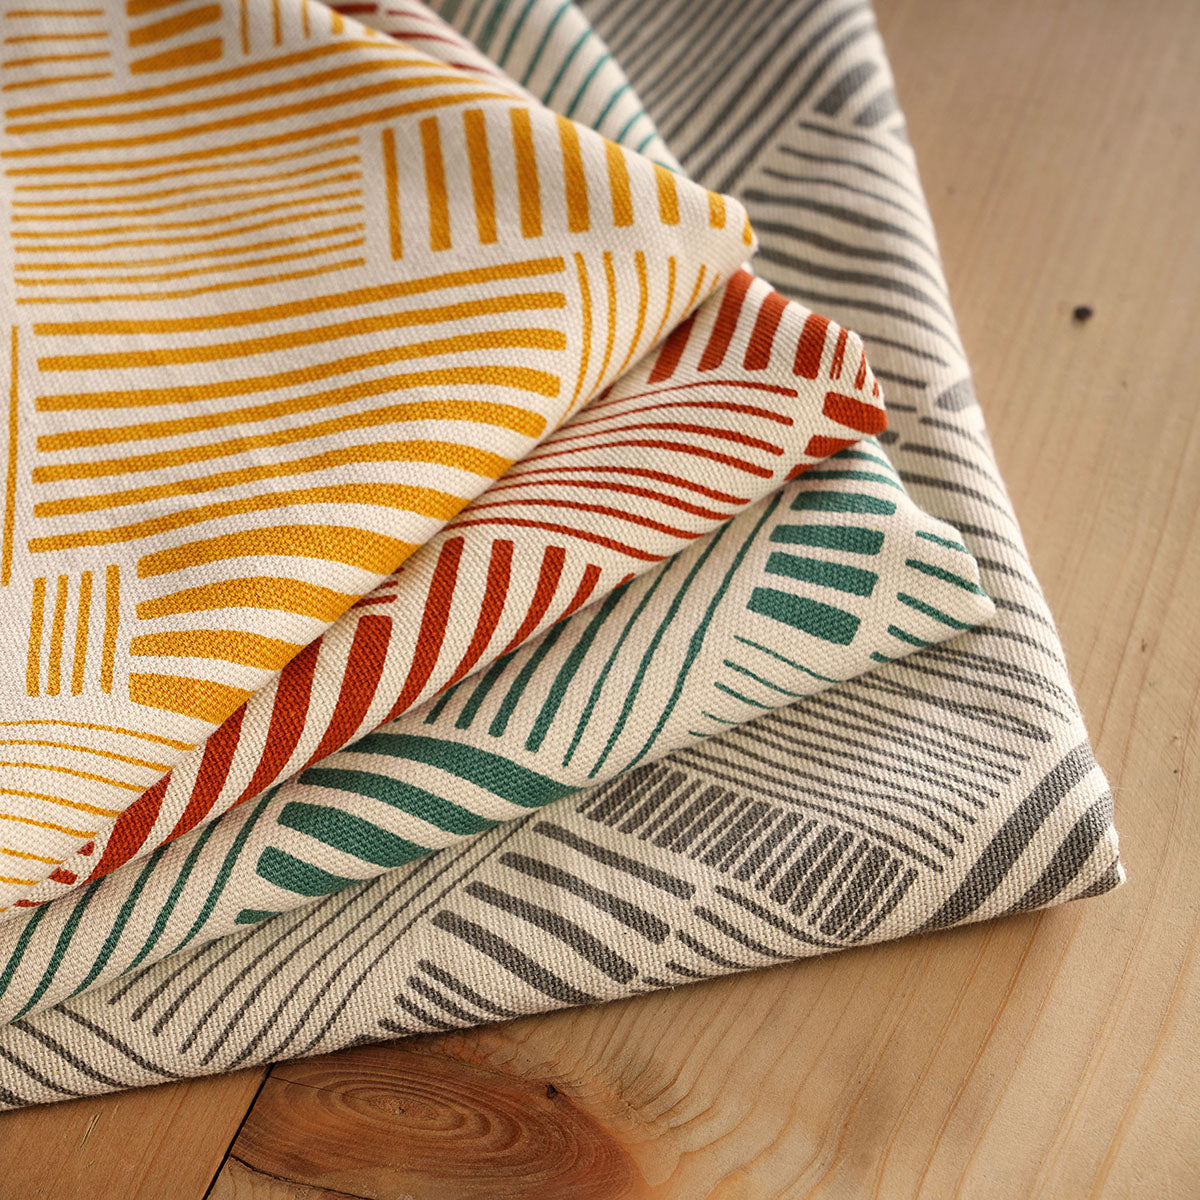 MODERN RETRO - Aqua Green cotton table cloth with geometrical stripe print, Sizes available